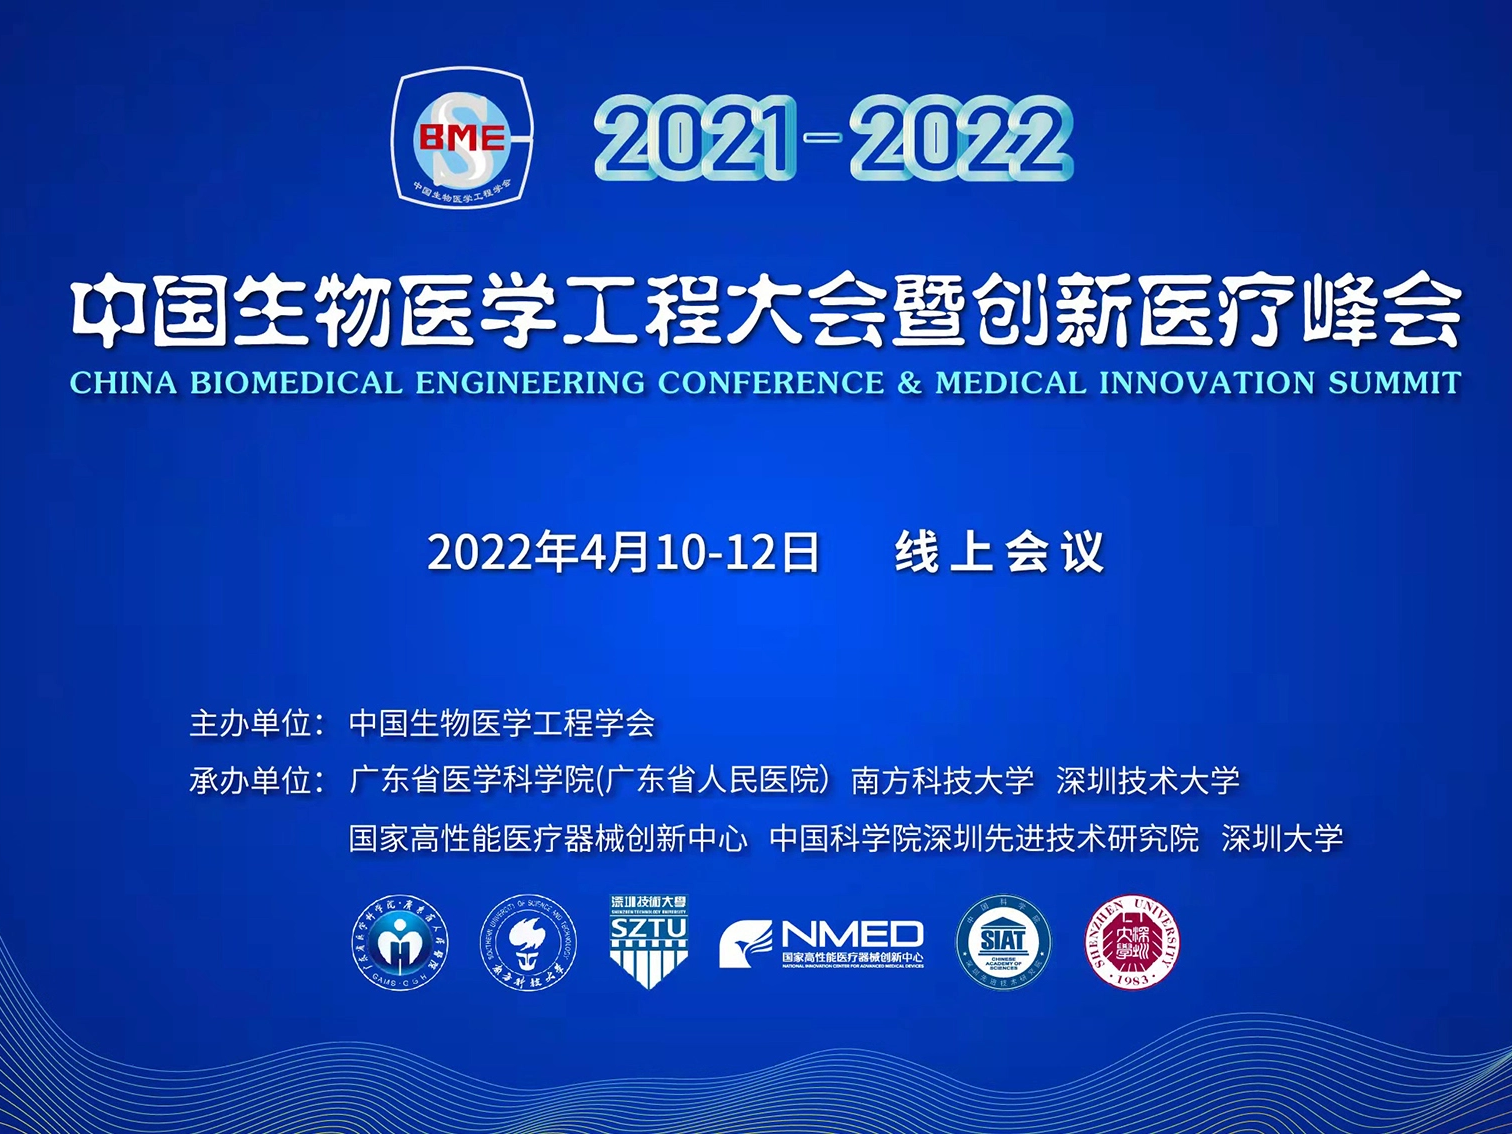 Boreasa was invited to China Biomedical Engineering Conference & Medical Innovation Summit 